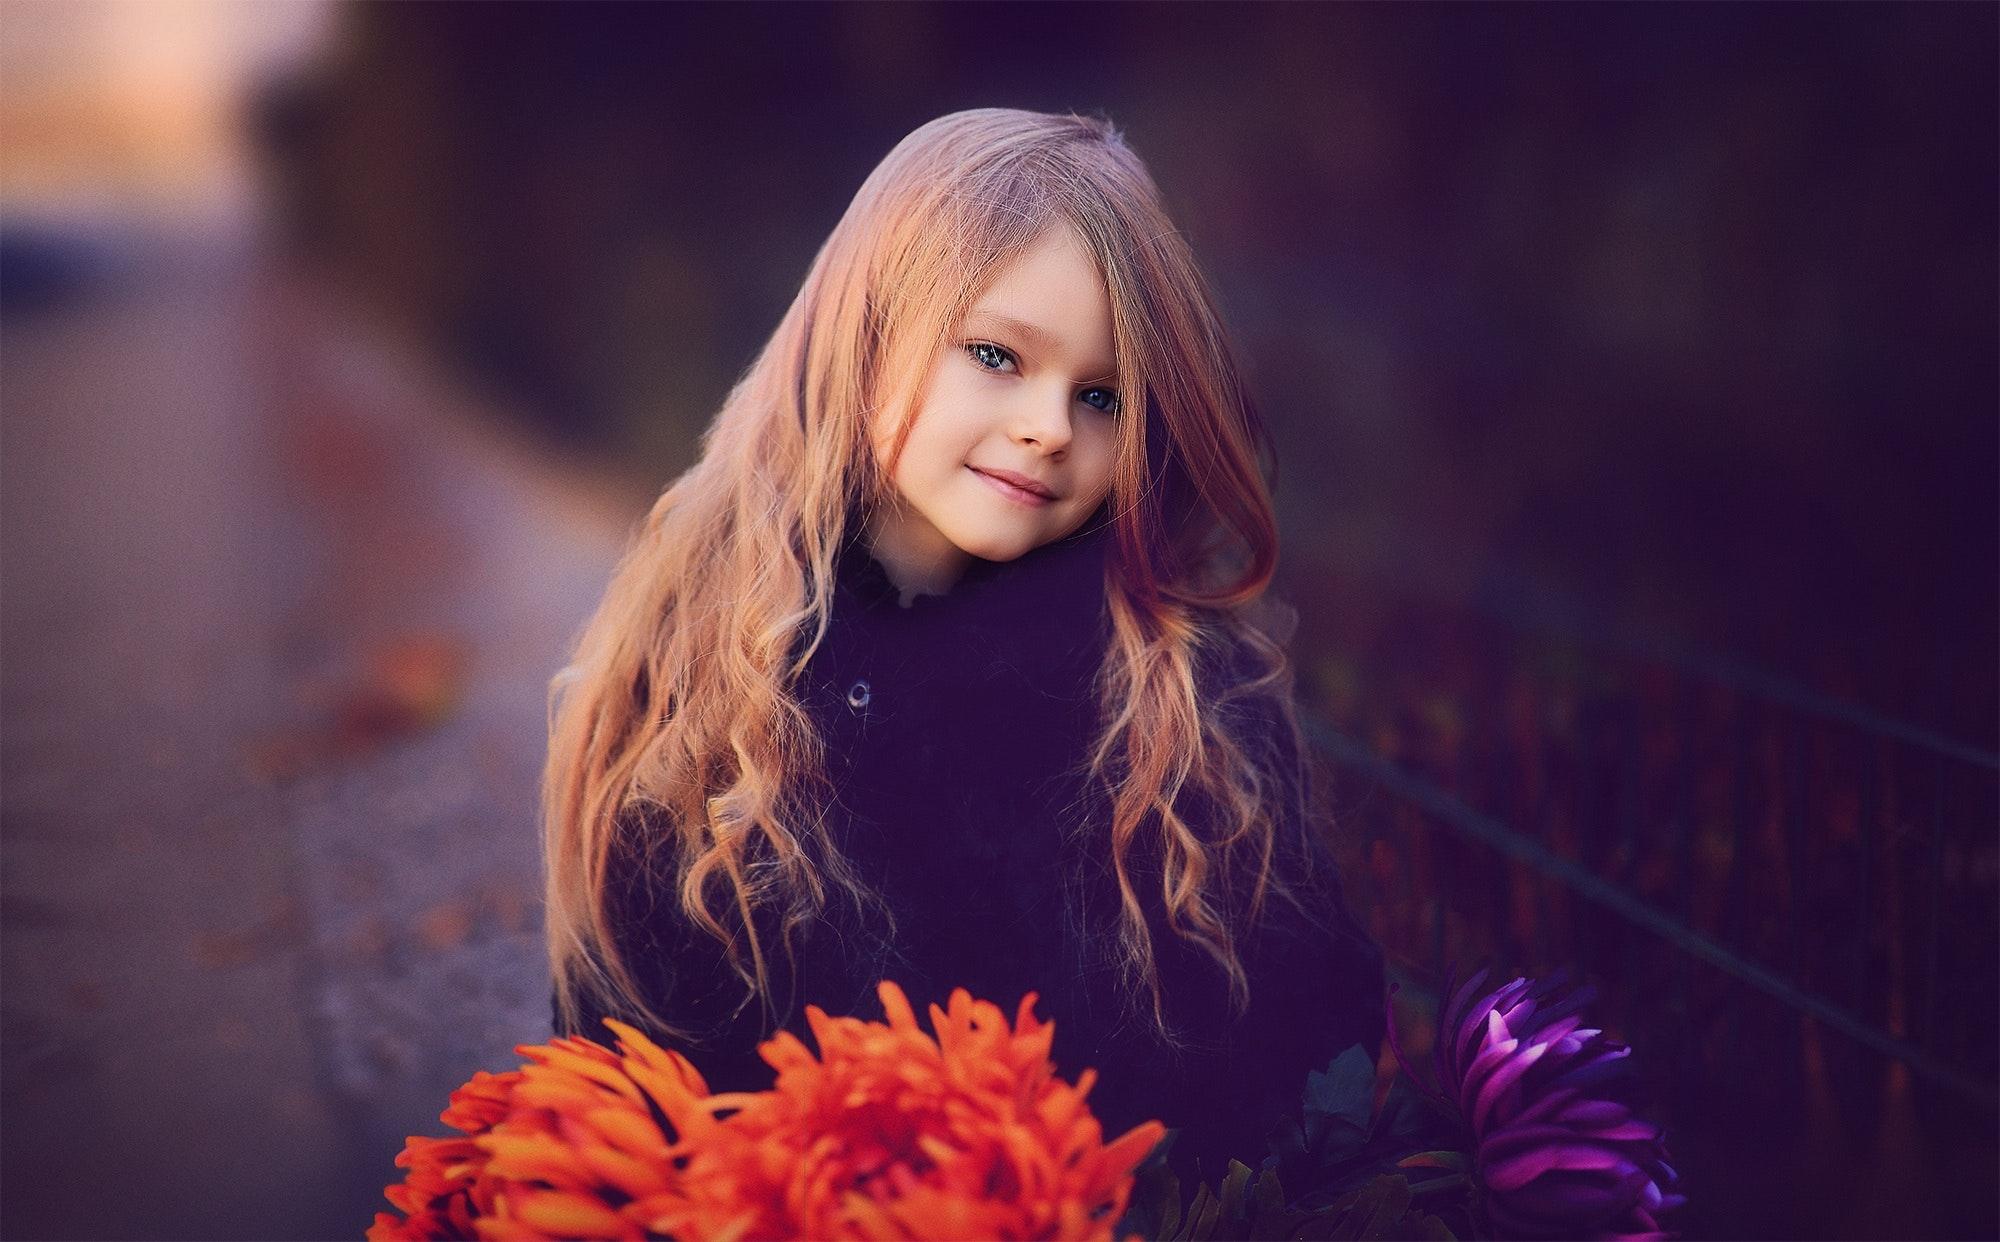 Cute Little Girl With Flowers, HD Cute, 4k Wallpaper, Image